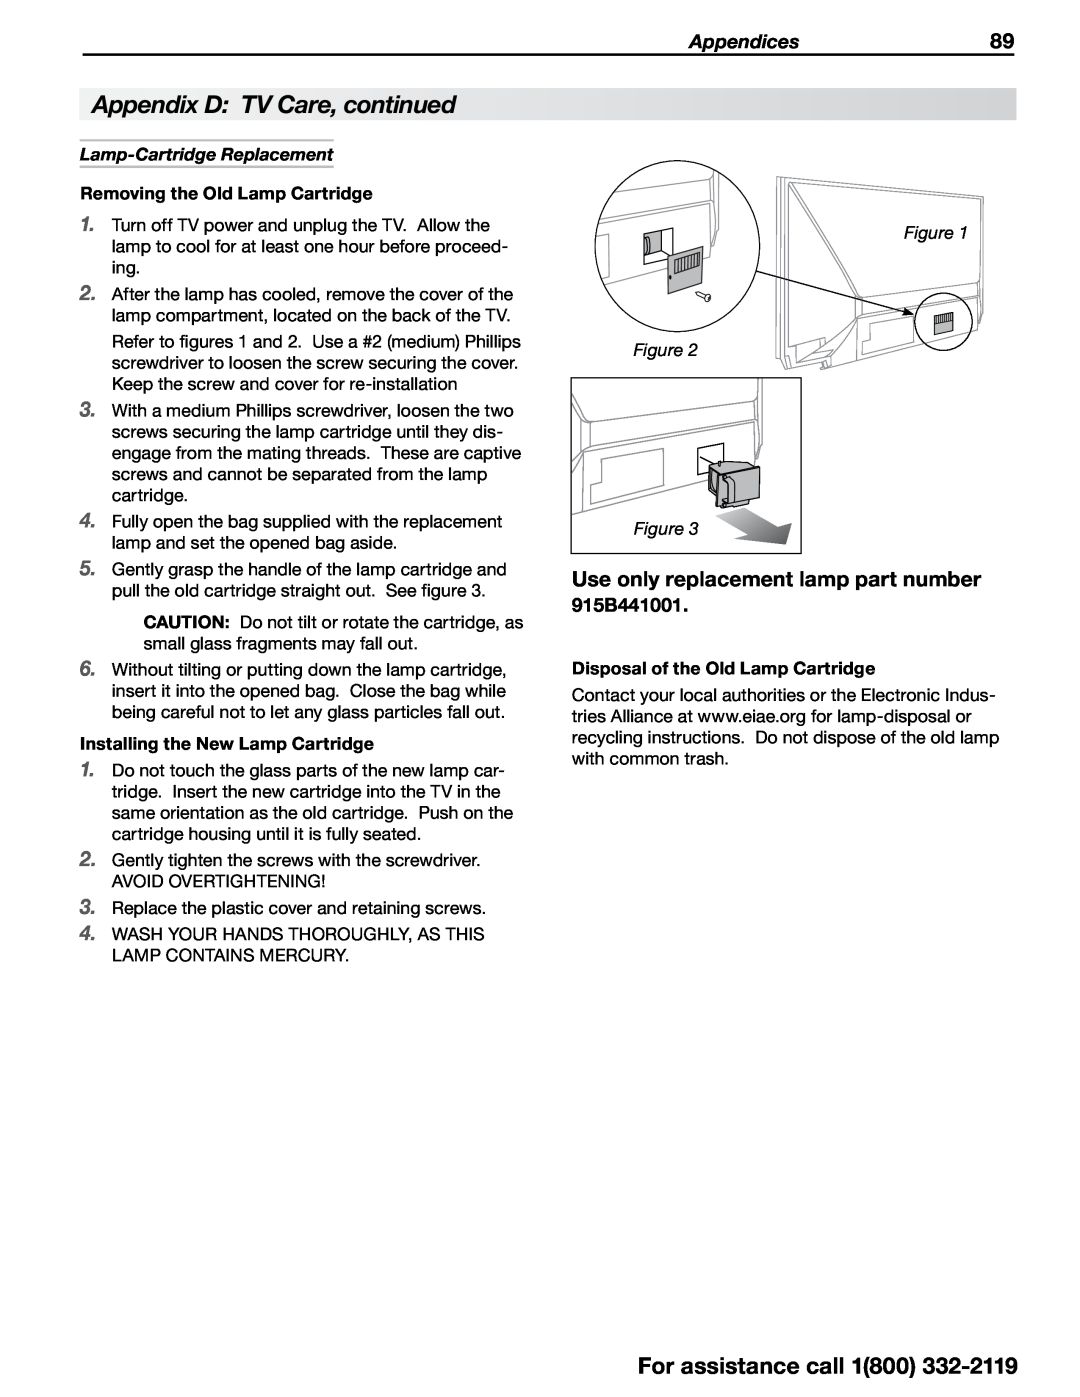 Mitsubishi Electronics 838 SERIES manual Appendix D TV Care, continued, Appendices89, Lamp-Cartridge Replacement 